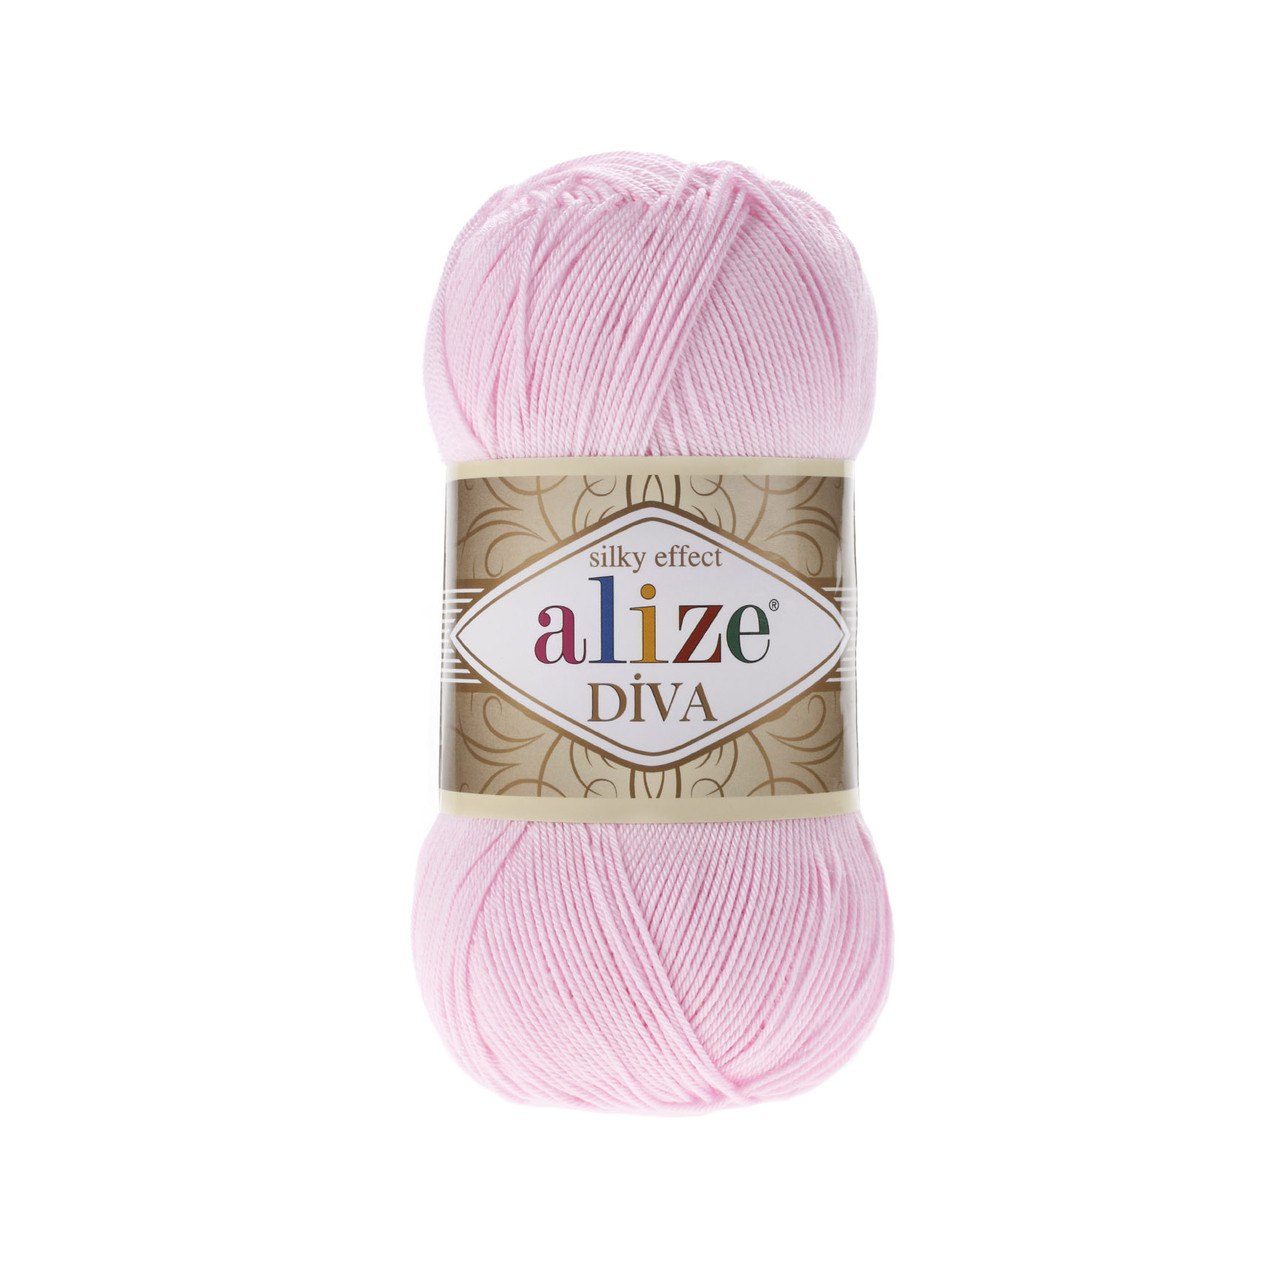 Пряжа Ализе Дива (Alize Diva) цвет 185 детский розовый